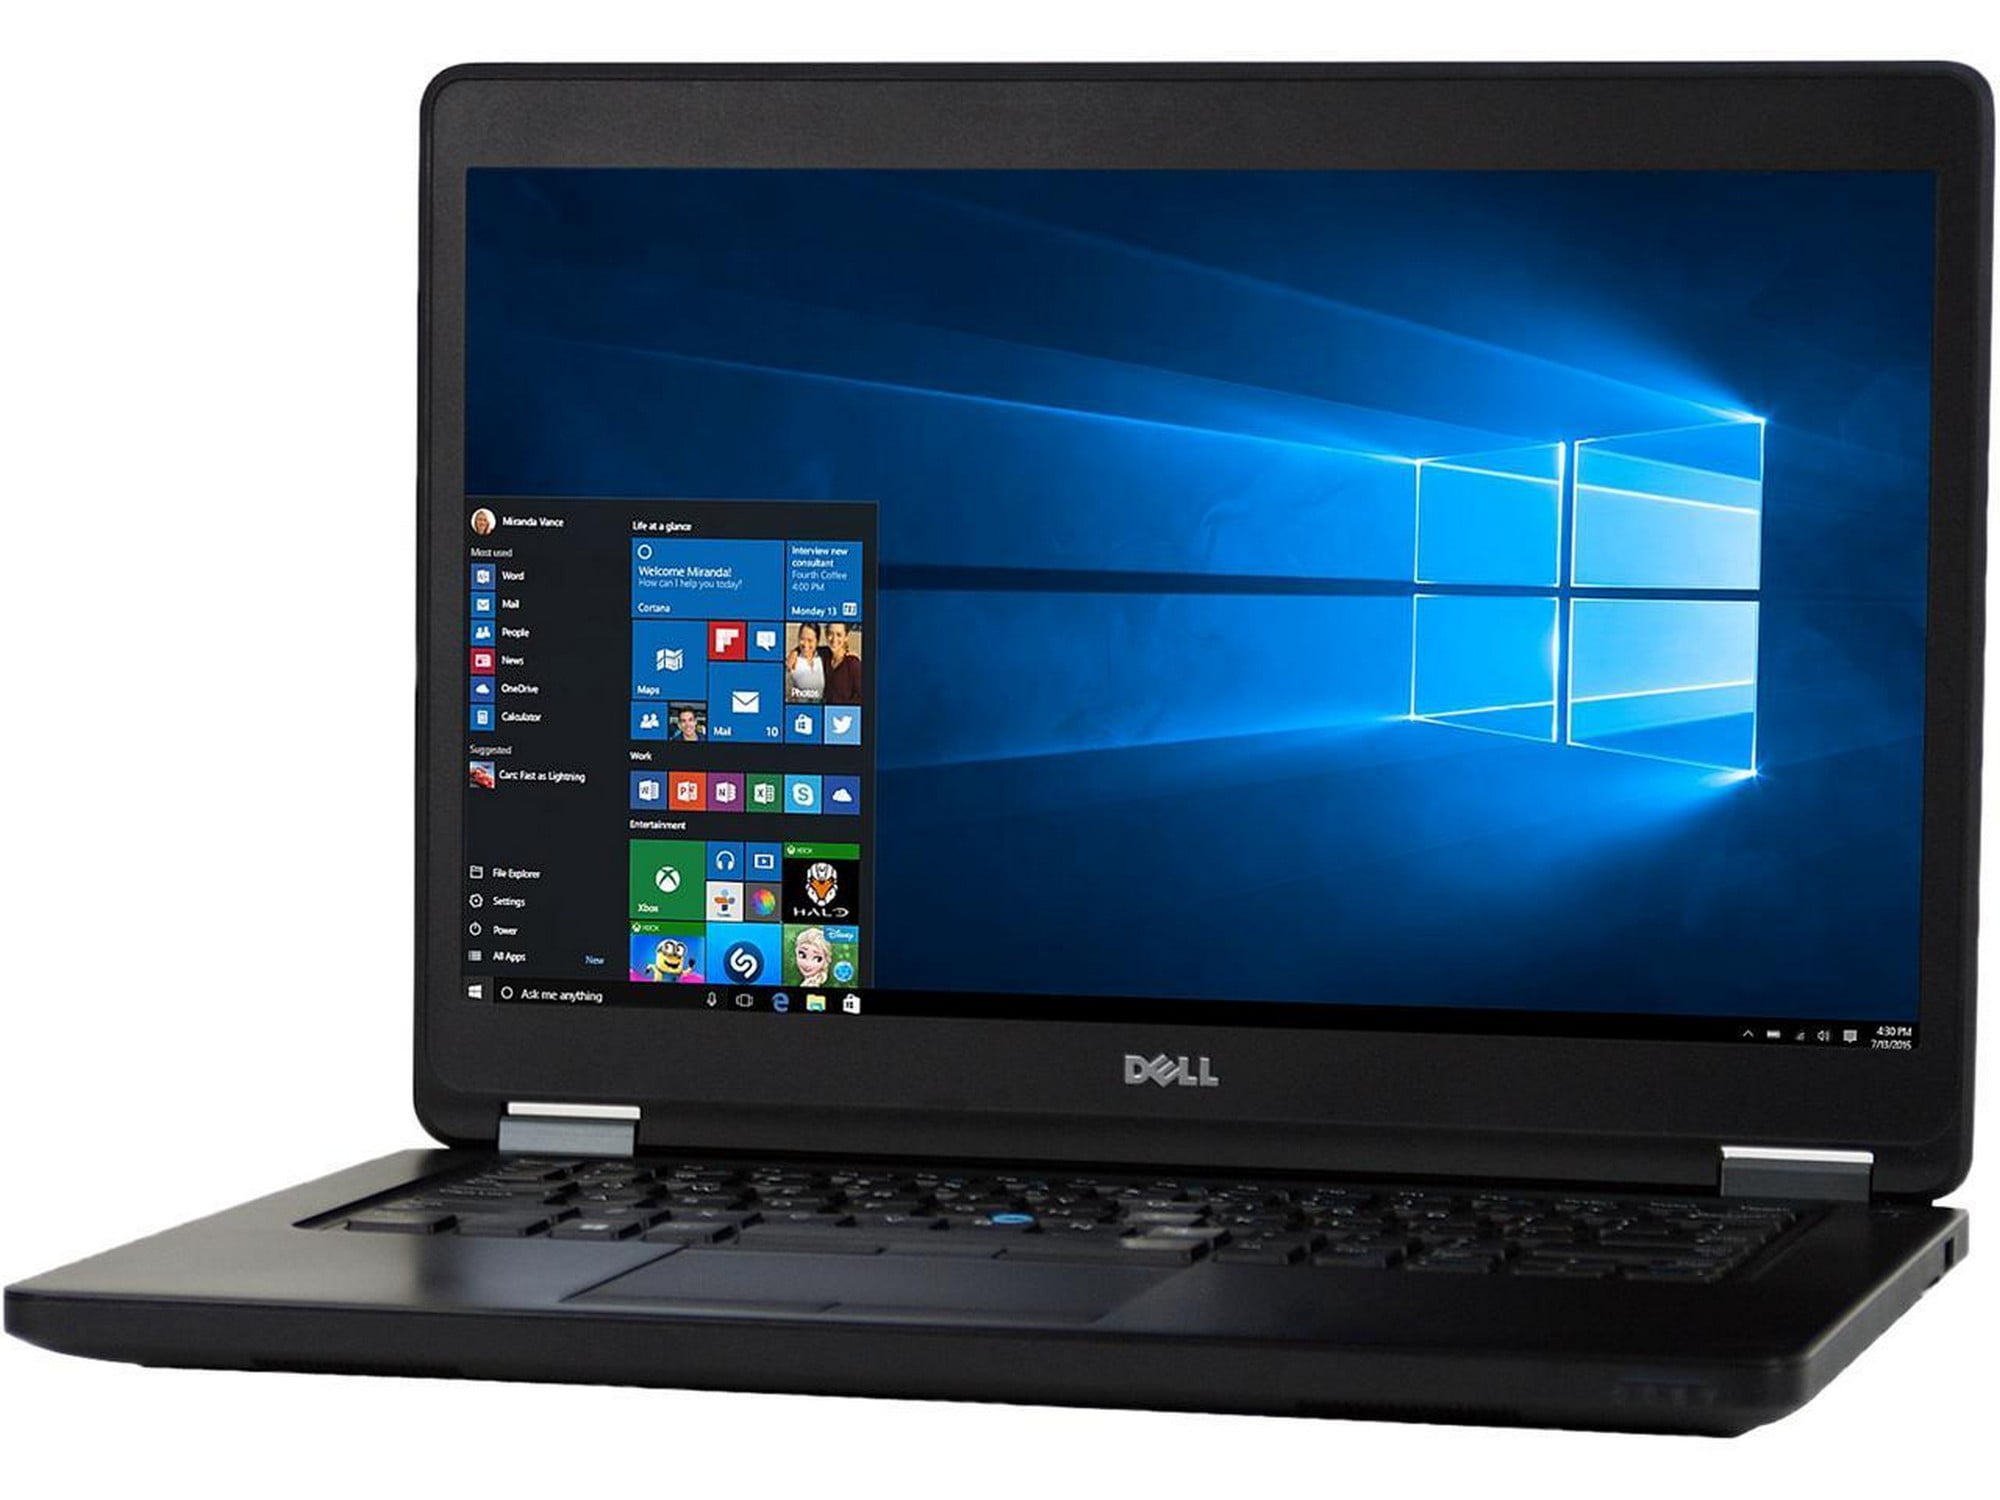 Refurbished Dell Latitude E5470 Laptop Computer, 3.00 GHz Intel i5 Dual Core Gen 6, 16GB DDR3 RAM, 500GB Hard Drive (HDD) SATA Hard Drive, Windows 10 Professional, 14" Screen